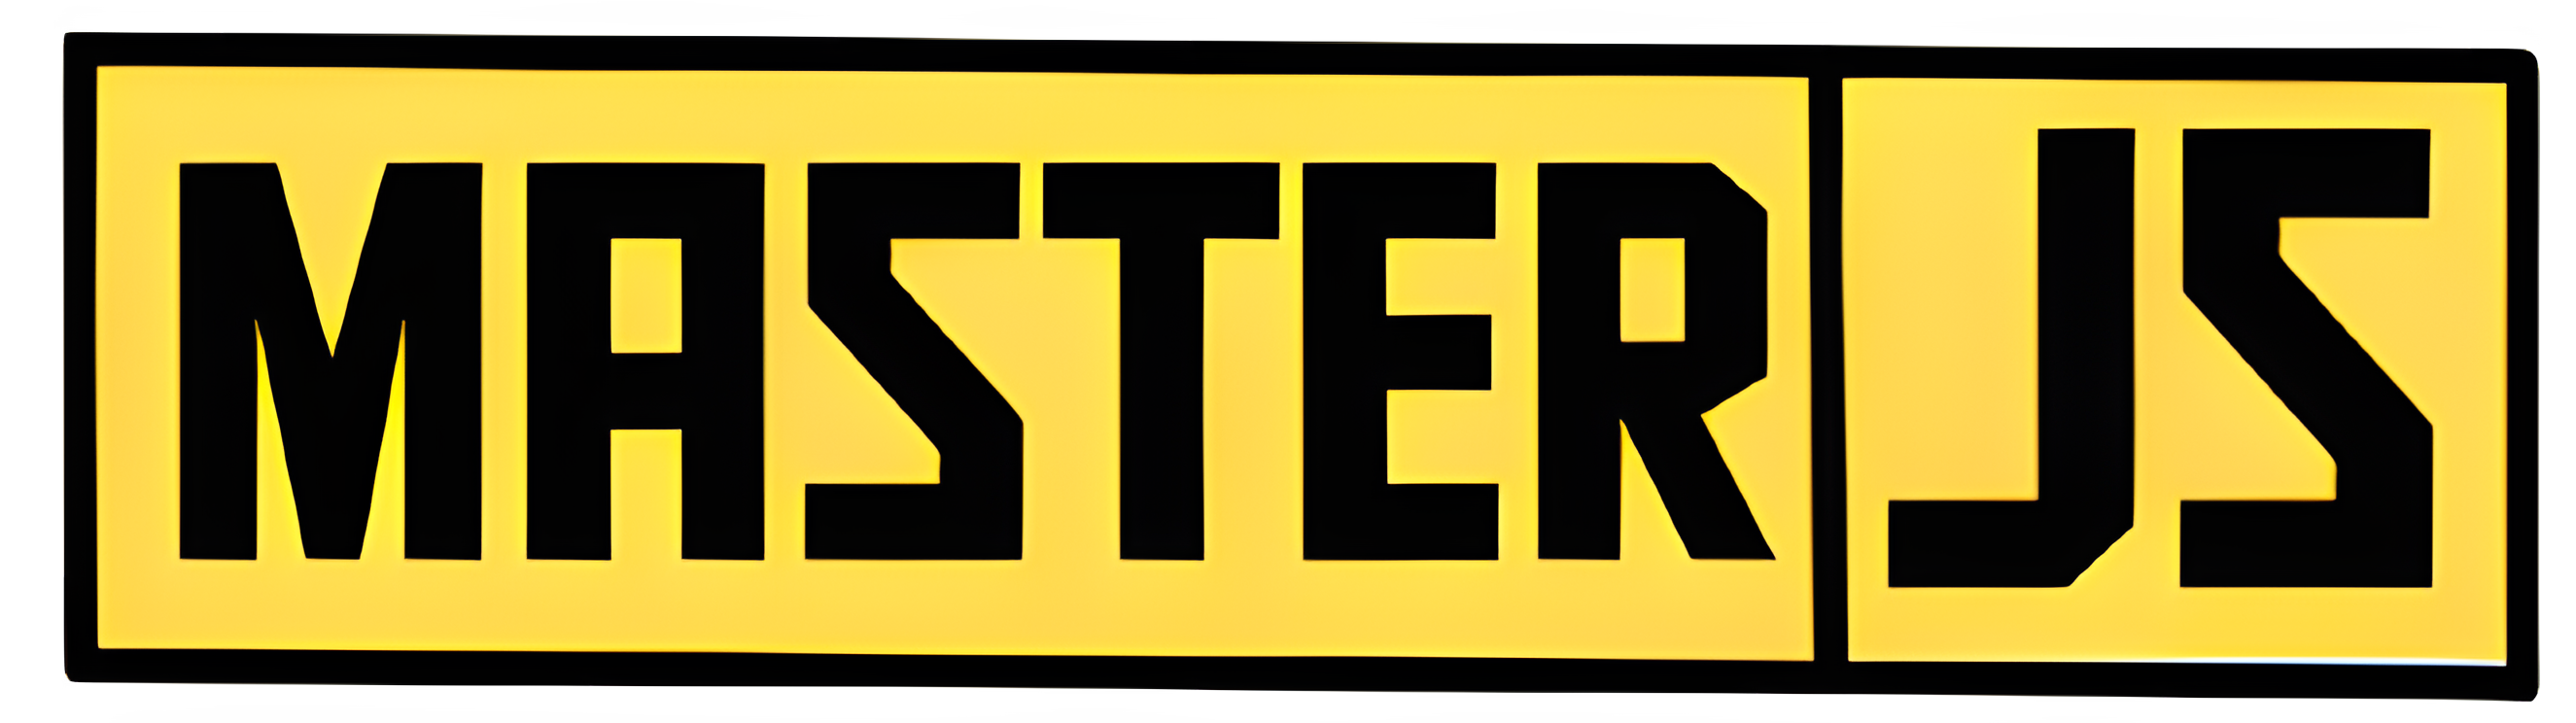 masterJS logo image